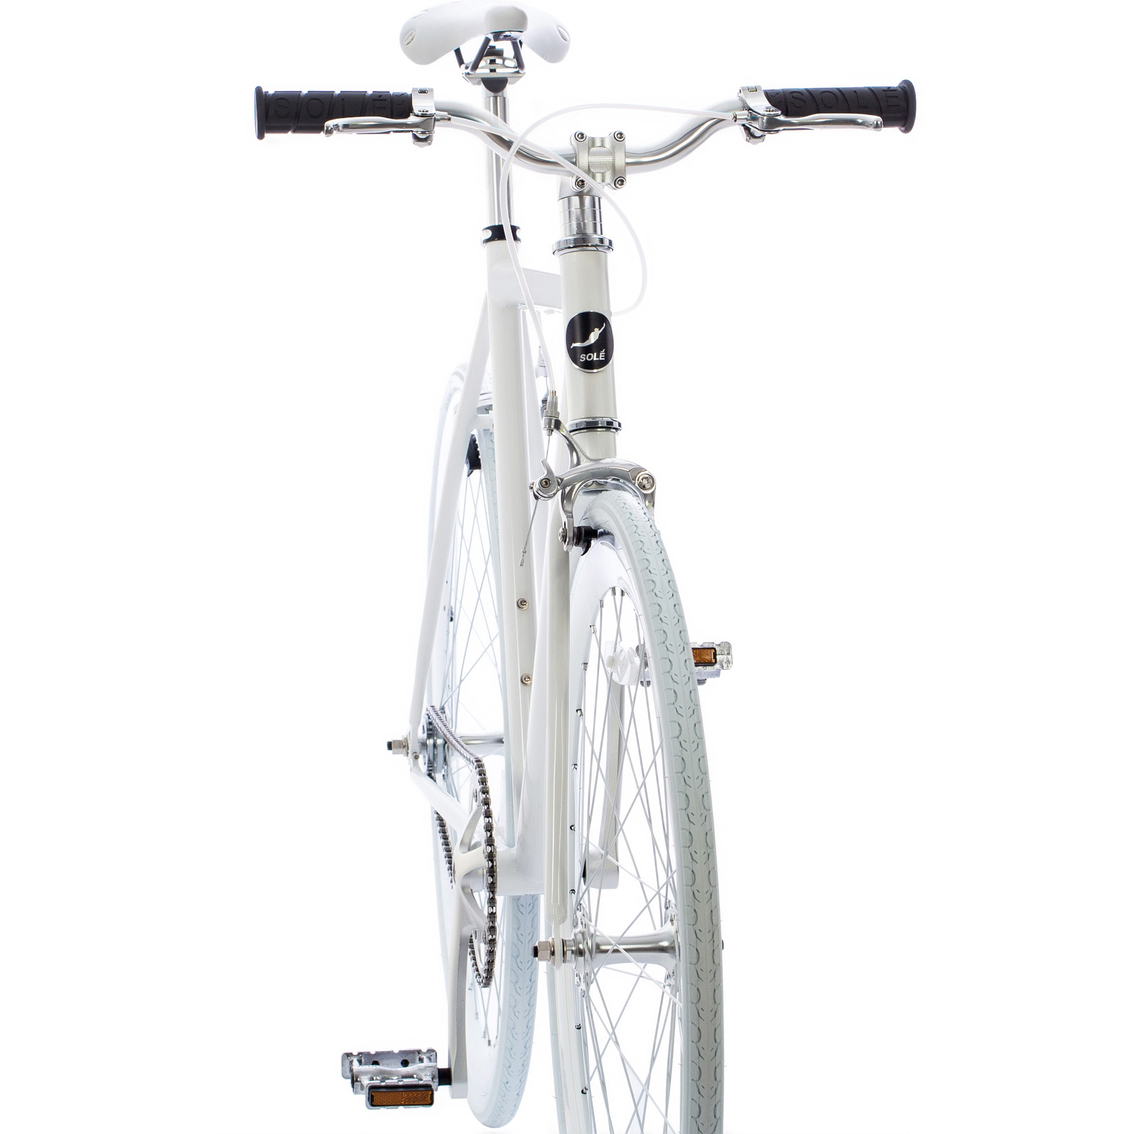 Sole el Blanco II Single Speed Bicycle - Image 2 of 5